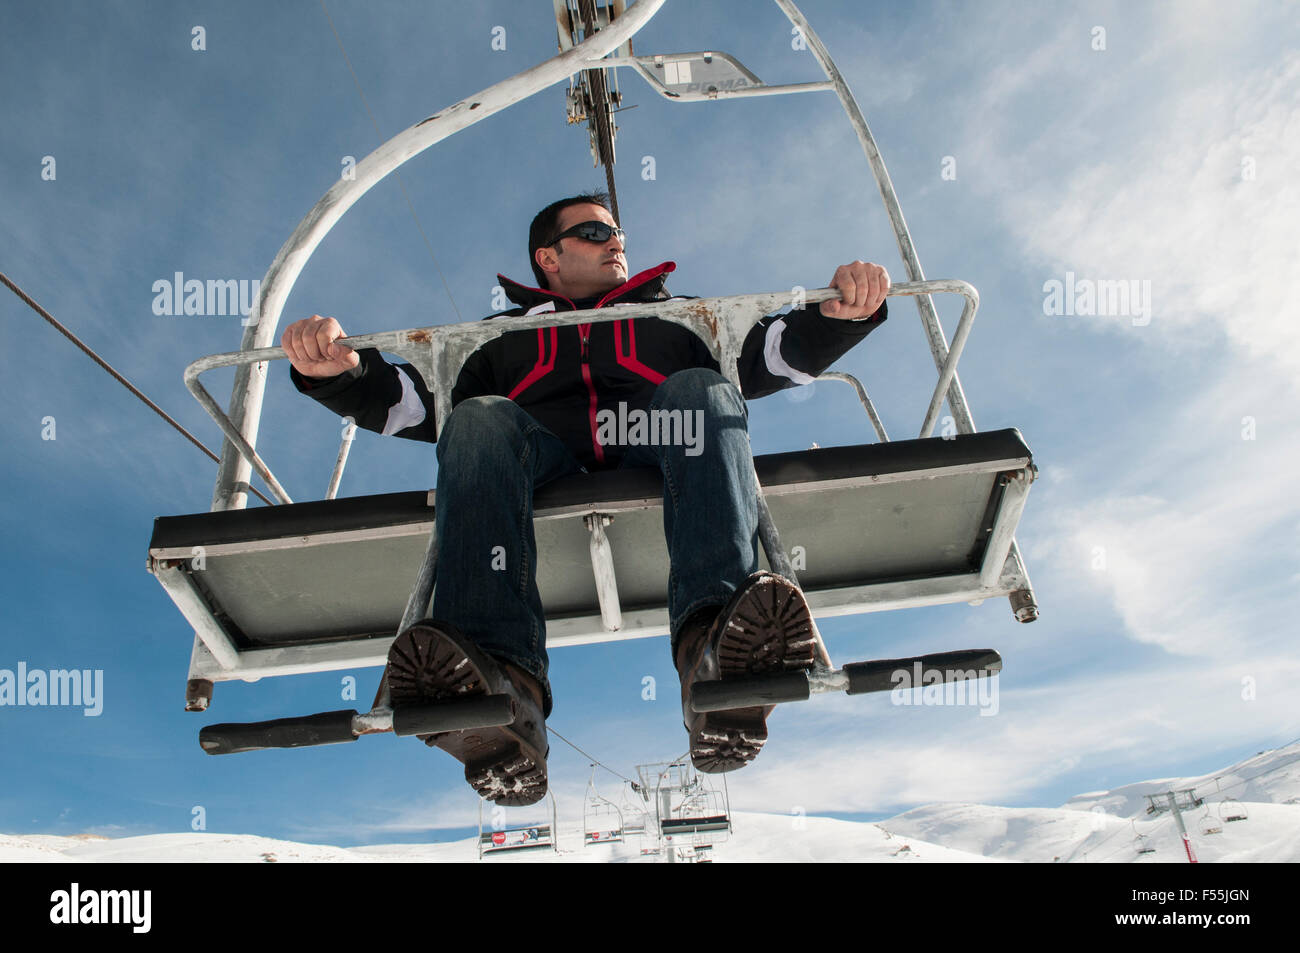 Man on a cable cart at Faraya skiing resort Kesrwan district Lebanon Stock Photo